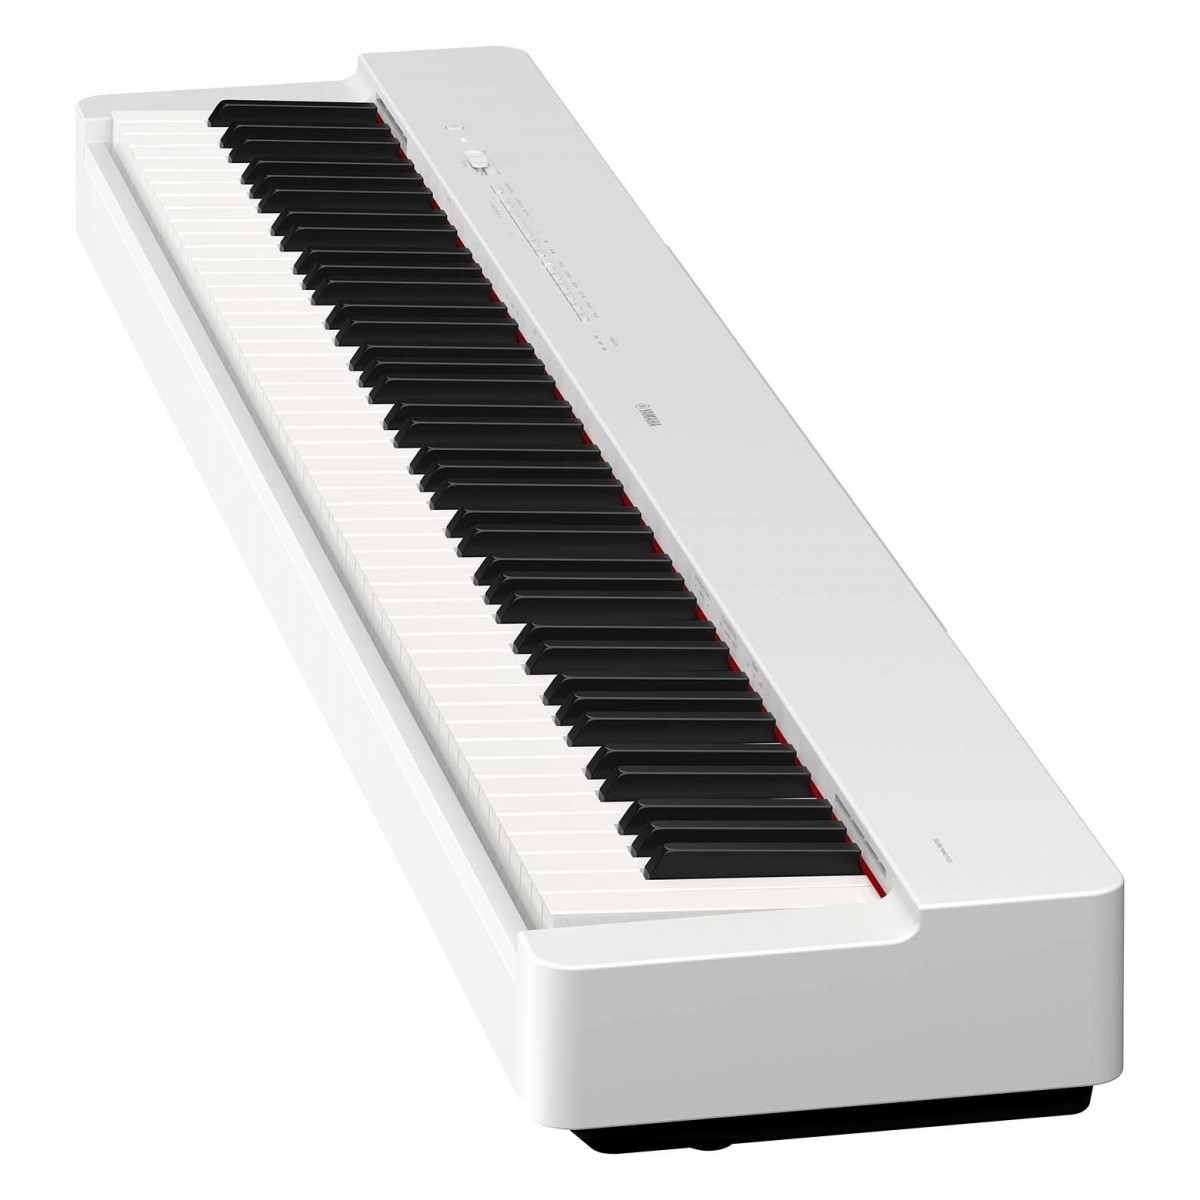 YAMAHA P225W WHITE PIANOFORTE DIGITALE 88 TASTI PESATI COLORE BIANCO 5